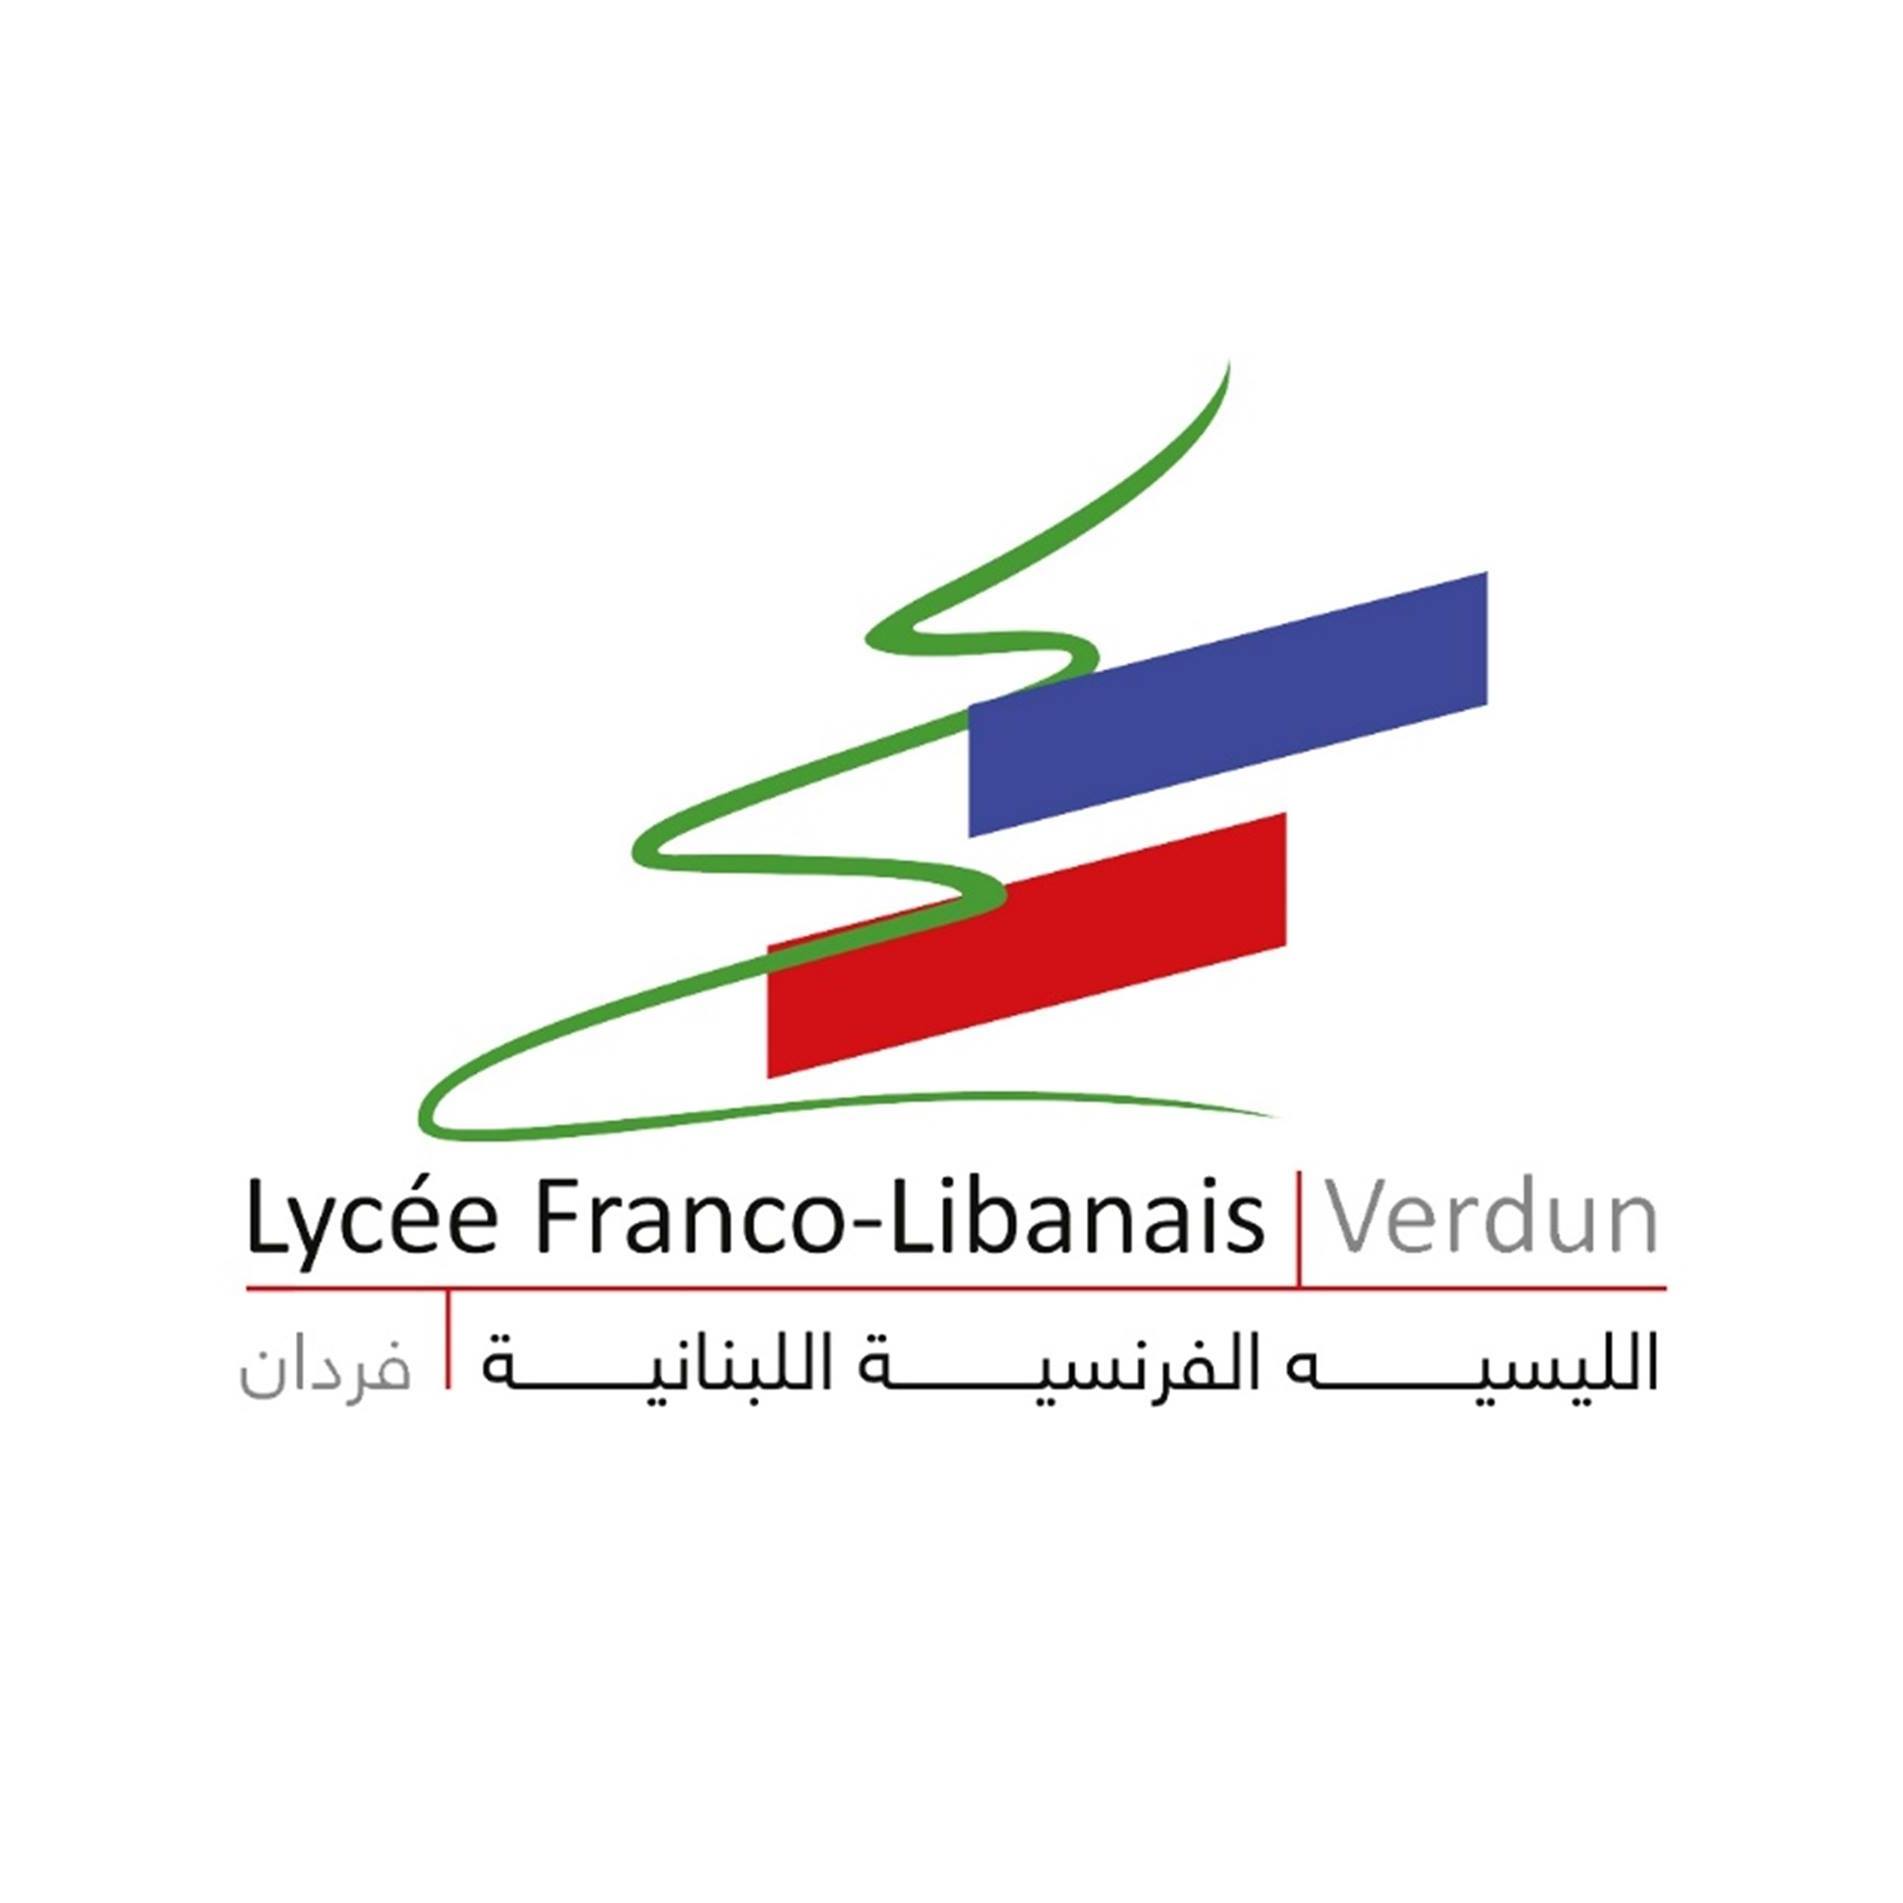 Lycée Franco-Libanais Verdun